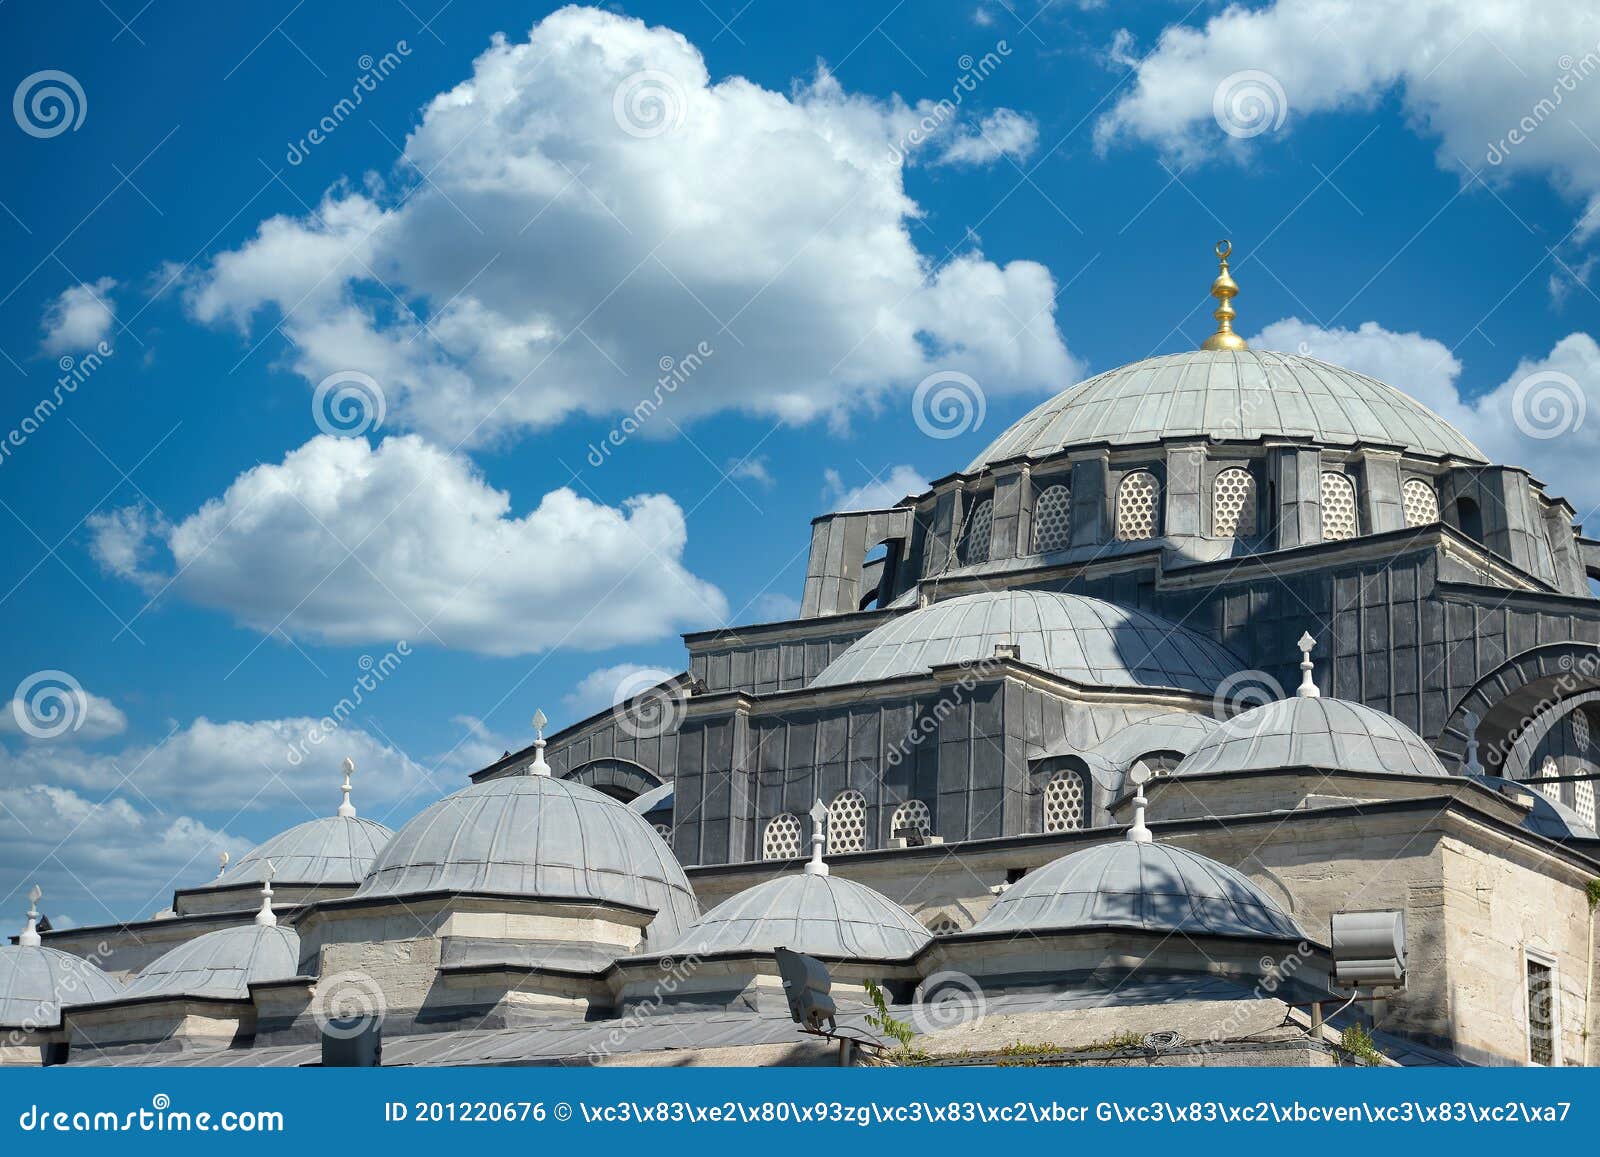 kilic ali pasa mosque, istanbul, turkey